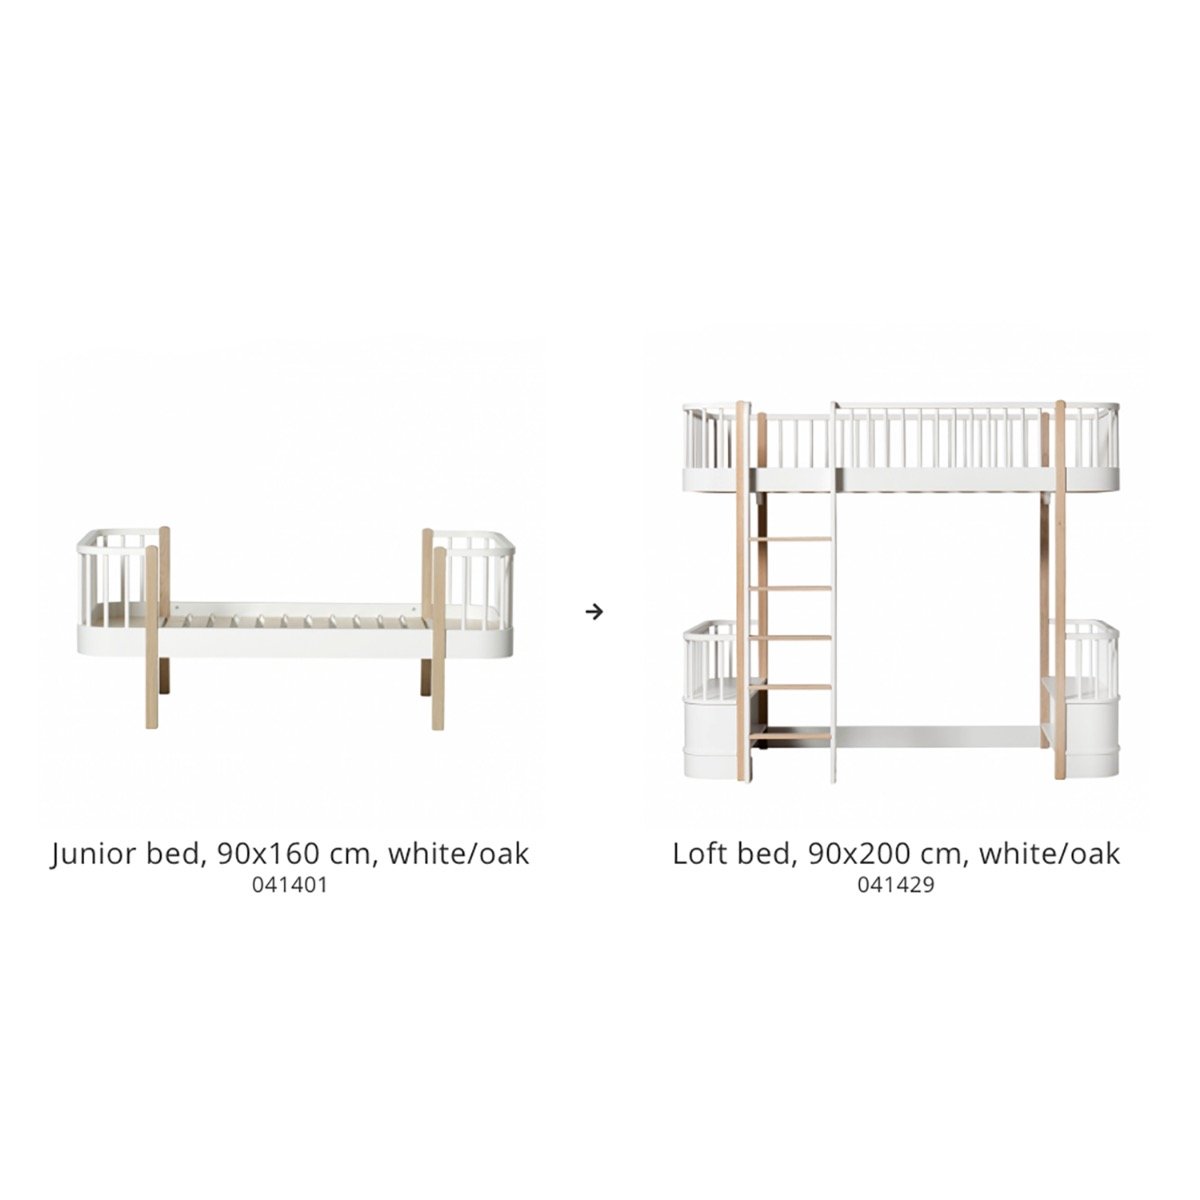 Wood Conversion Set | Bed/Junior Bed To Loft Bed | White/Oak